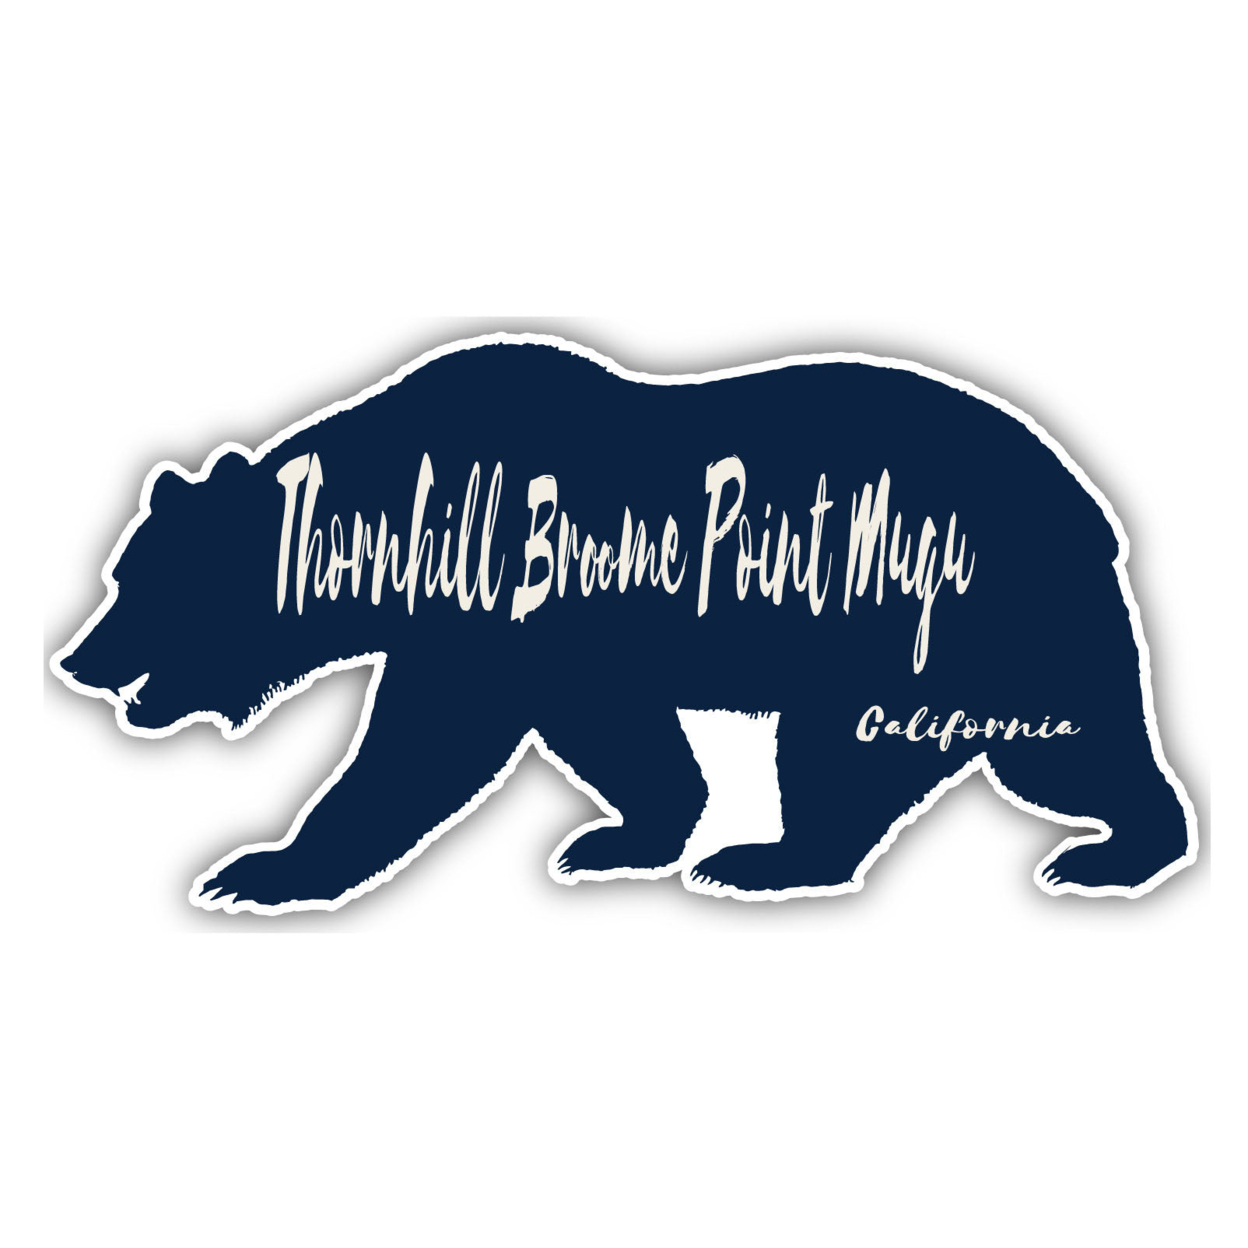 Thornhill Broome Point Mugu California Souvenir Decorative Stickers (Choose Theme And Size) - Single Unit, 2-Inch, Bear